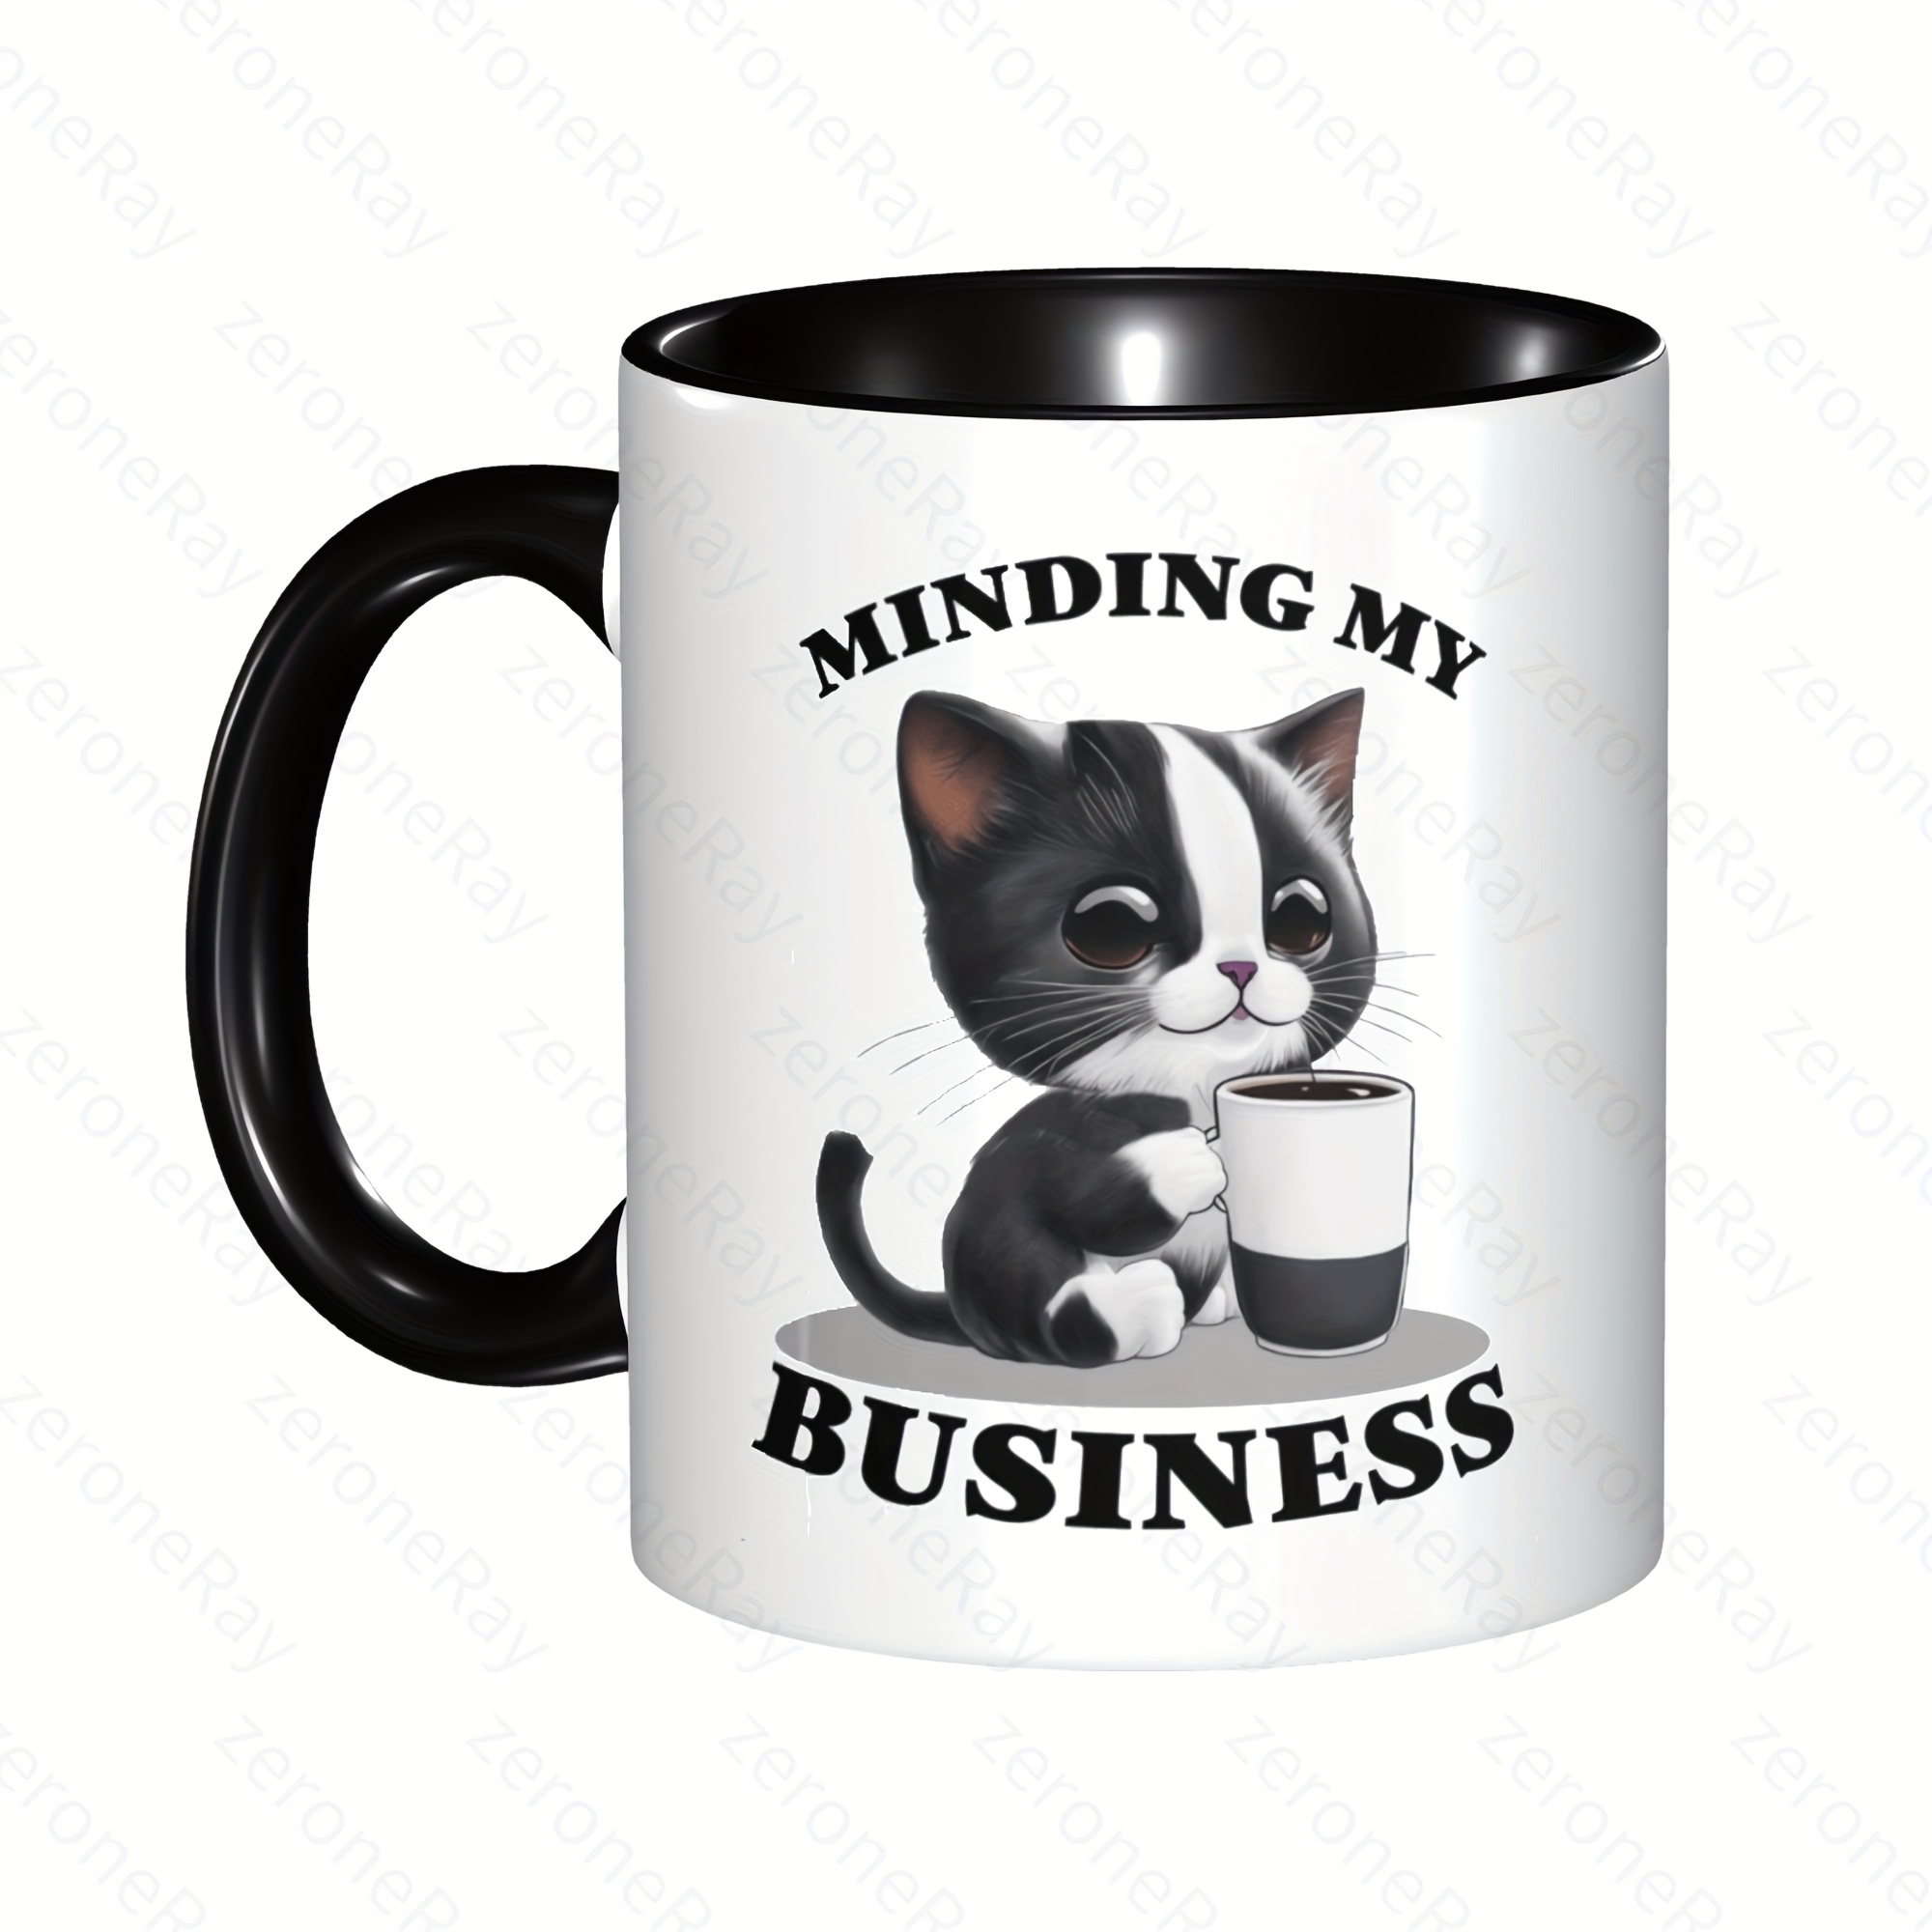 BigNoseDeer Cat Mug Cute Ceramic Coffee Cup with Lovely Kitty Lid, Cat Paw Spoon,kawaii coaster,Novelty Morning Cup Tea Milk Christmas Mug 380ml